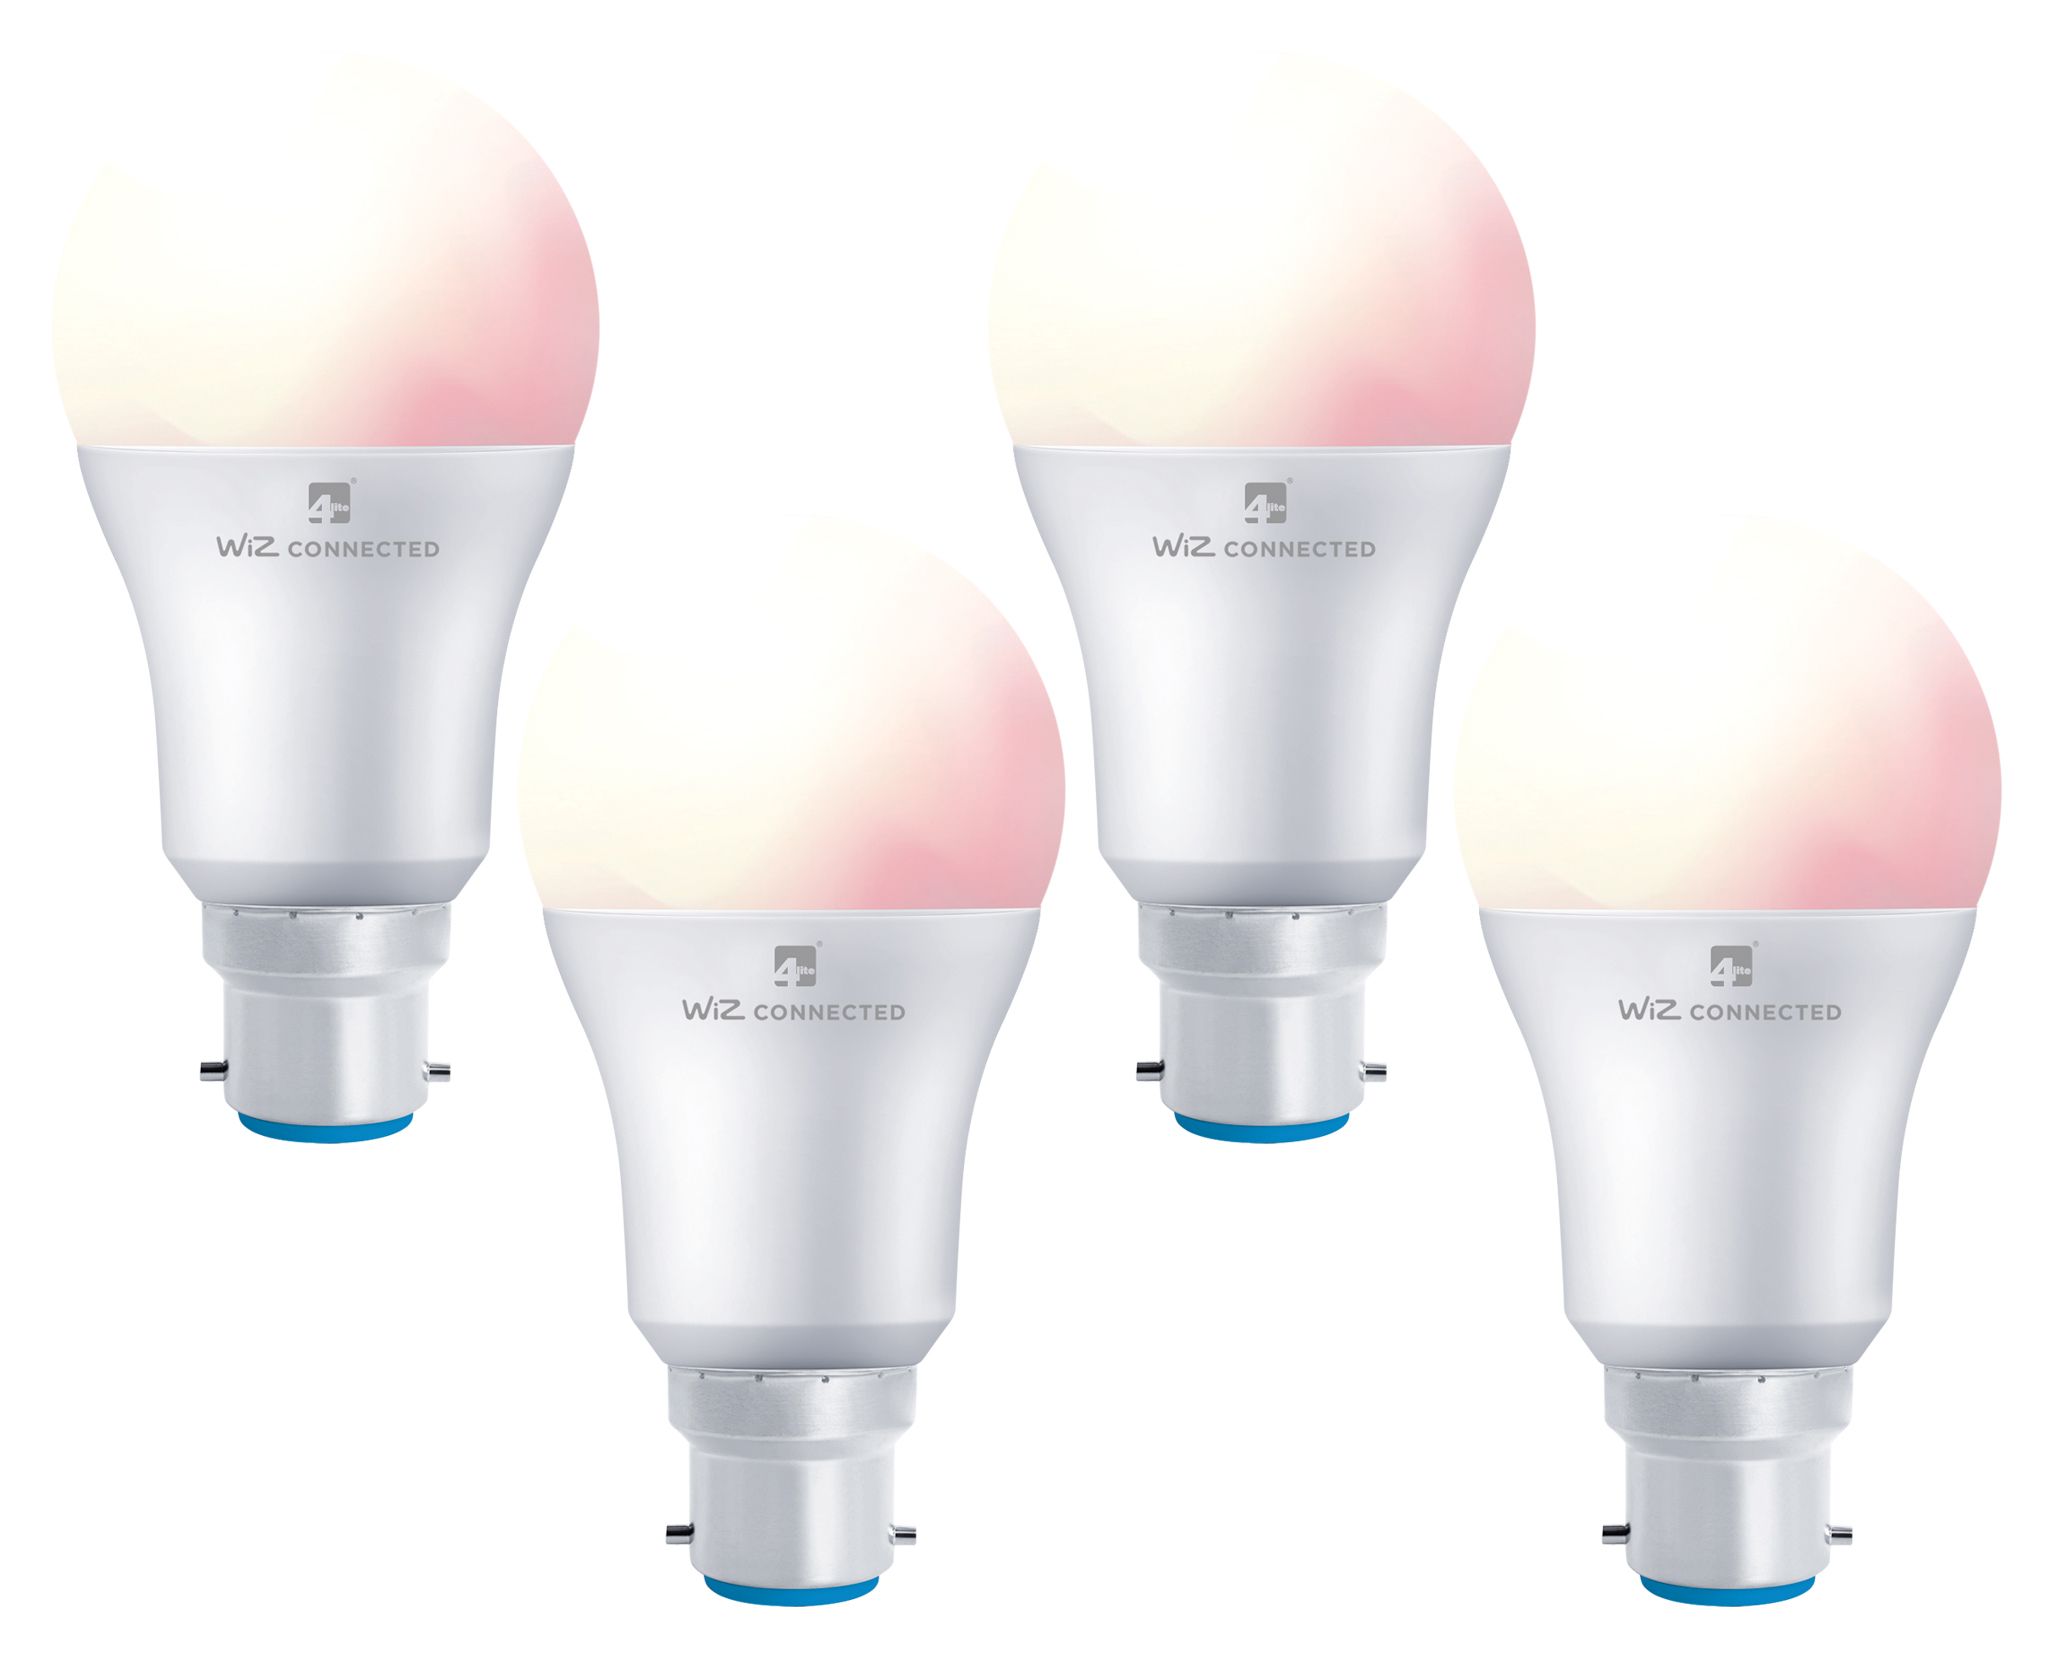 4lite WiZ Connected LED SMART B22 Light Bulbs - White & Colour - Pack of 4